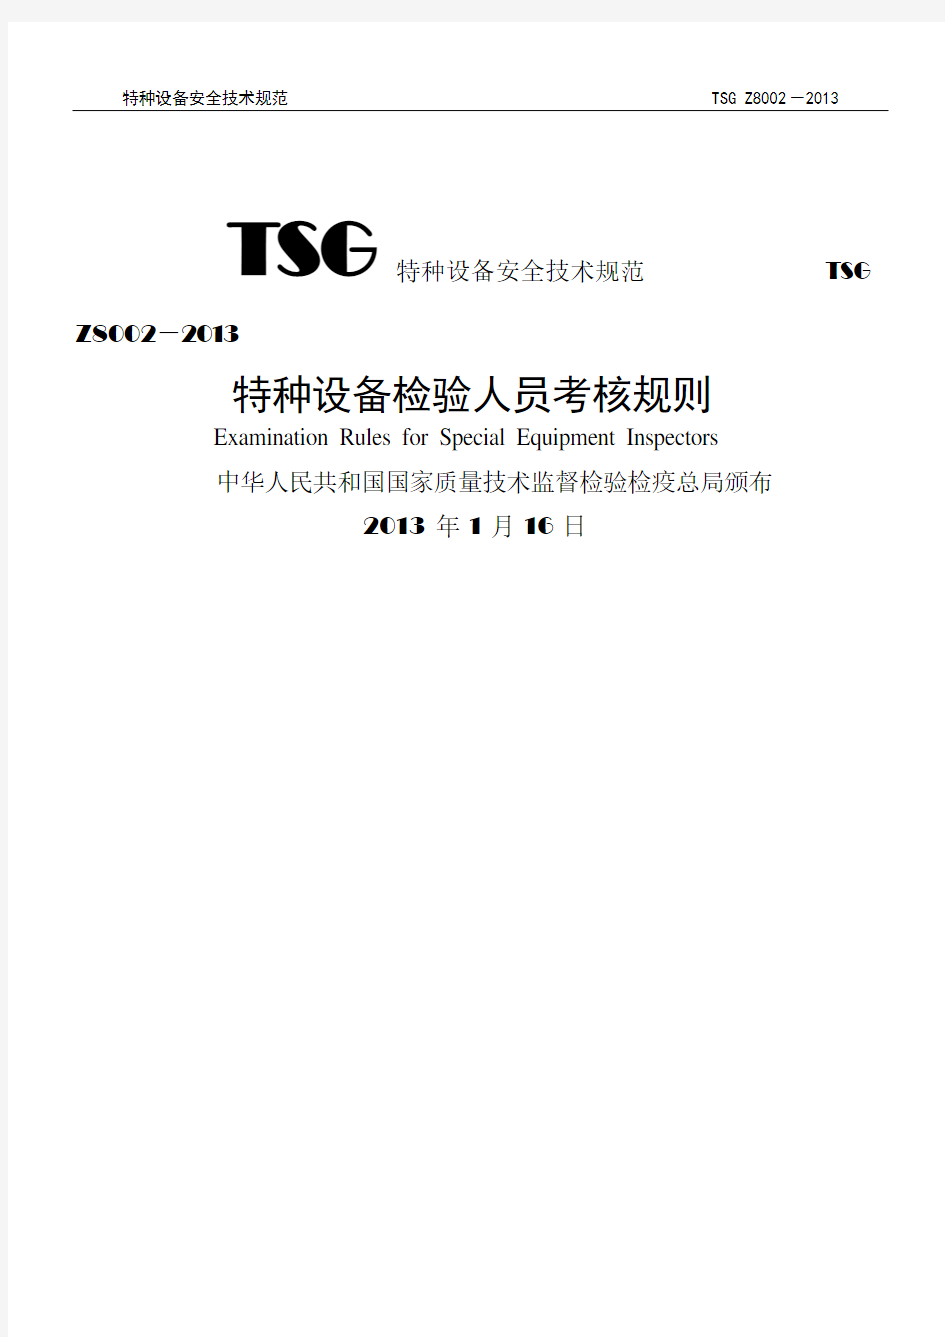 TSG特种设备安全技术规范TSGZ8002-2013